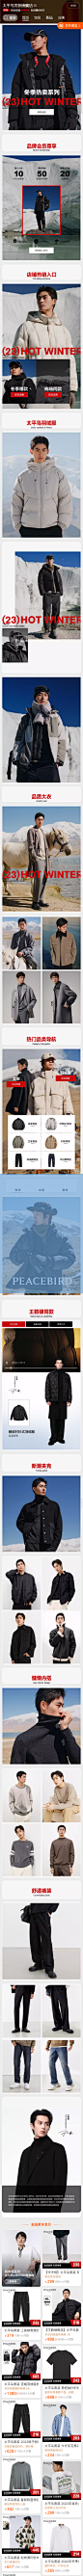 FireShot Capture 1278 - 太平鸟男装旗舰店 - peacebird